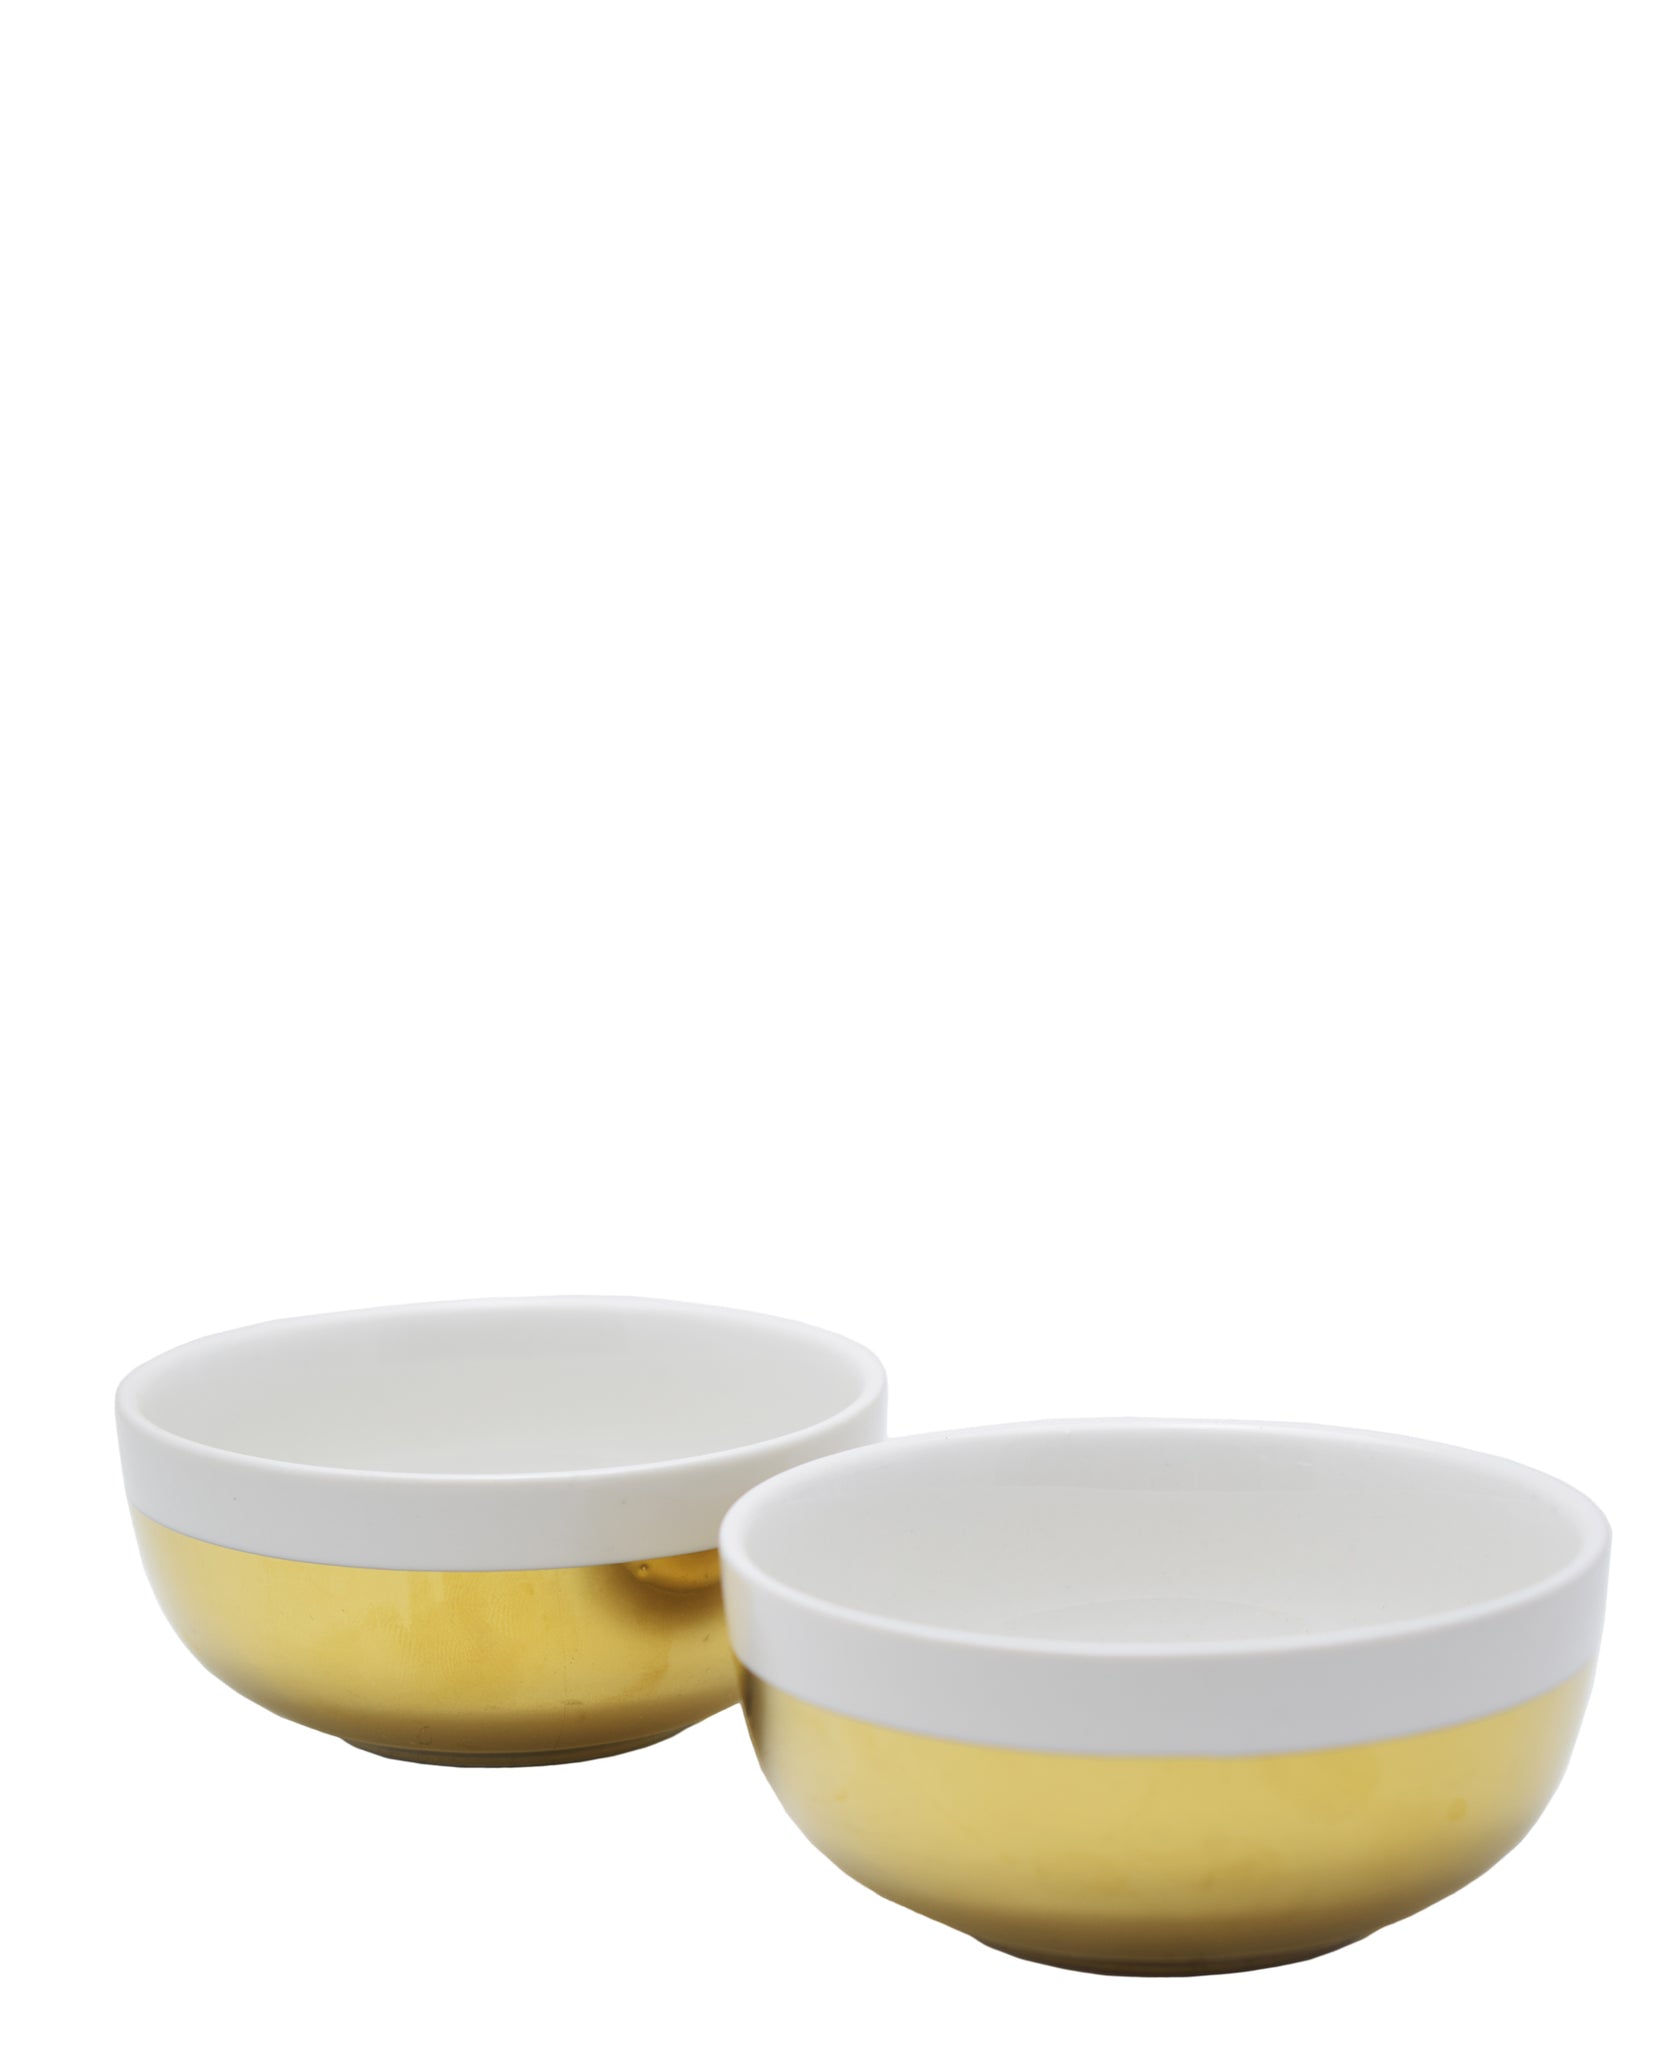 Symphony Adorn Gold Dip Bowls Set Of 2 - White & Gold